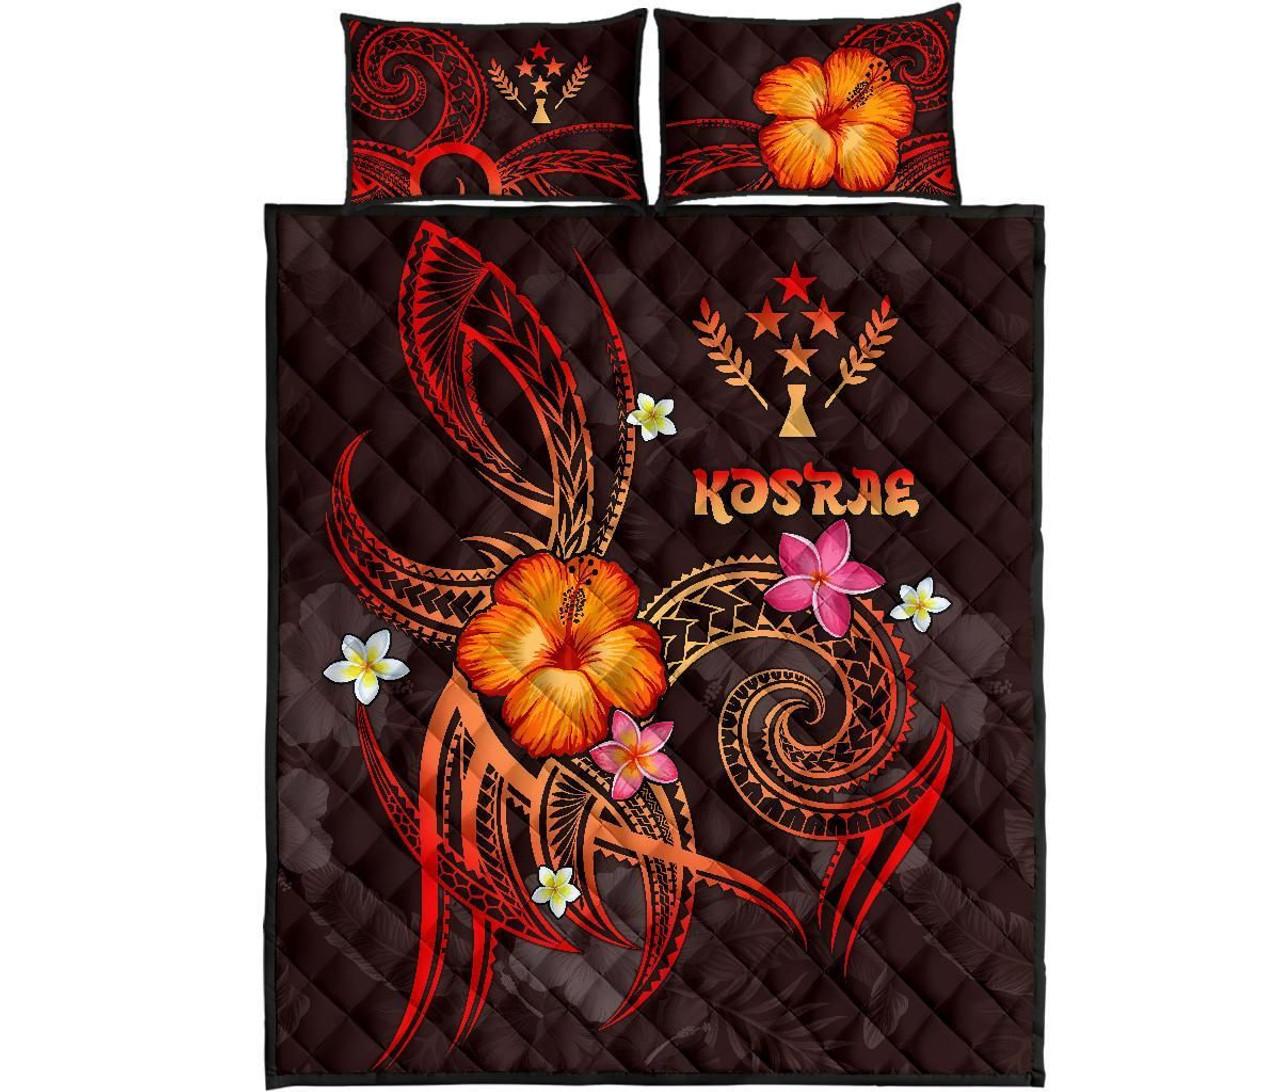 Kosrae Polynesian Quilt Bed Set - Legend of Kosrae (Red) 5